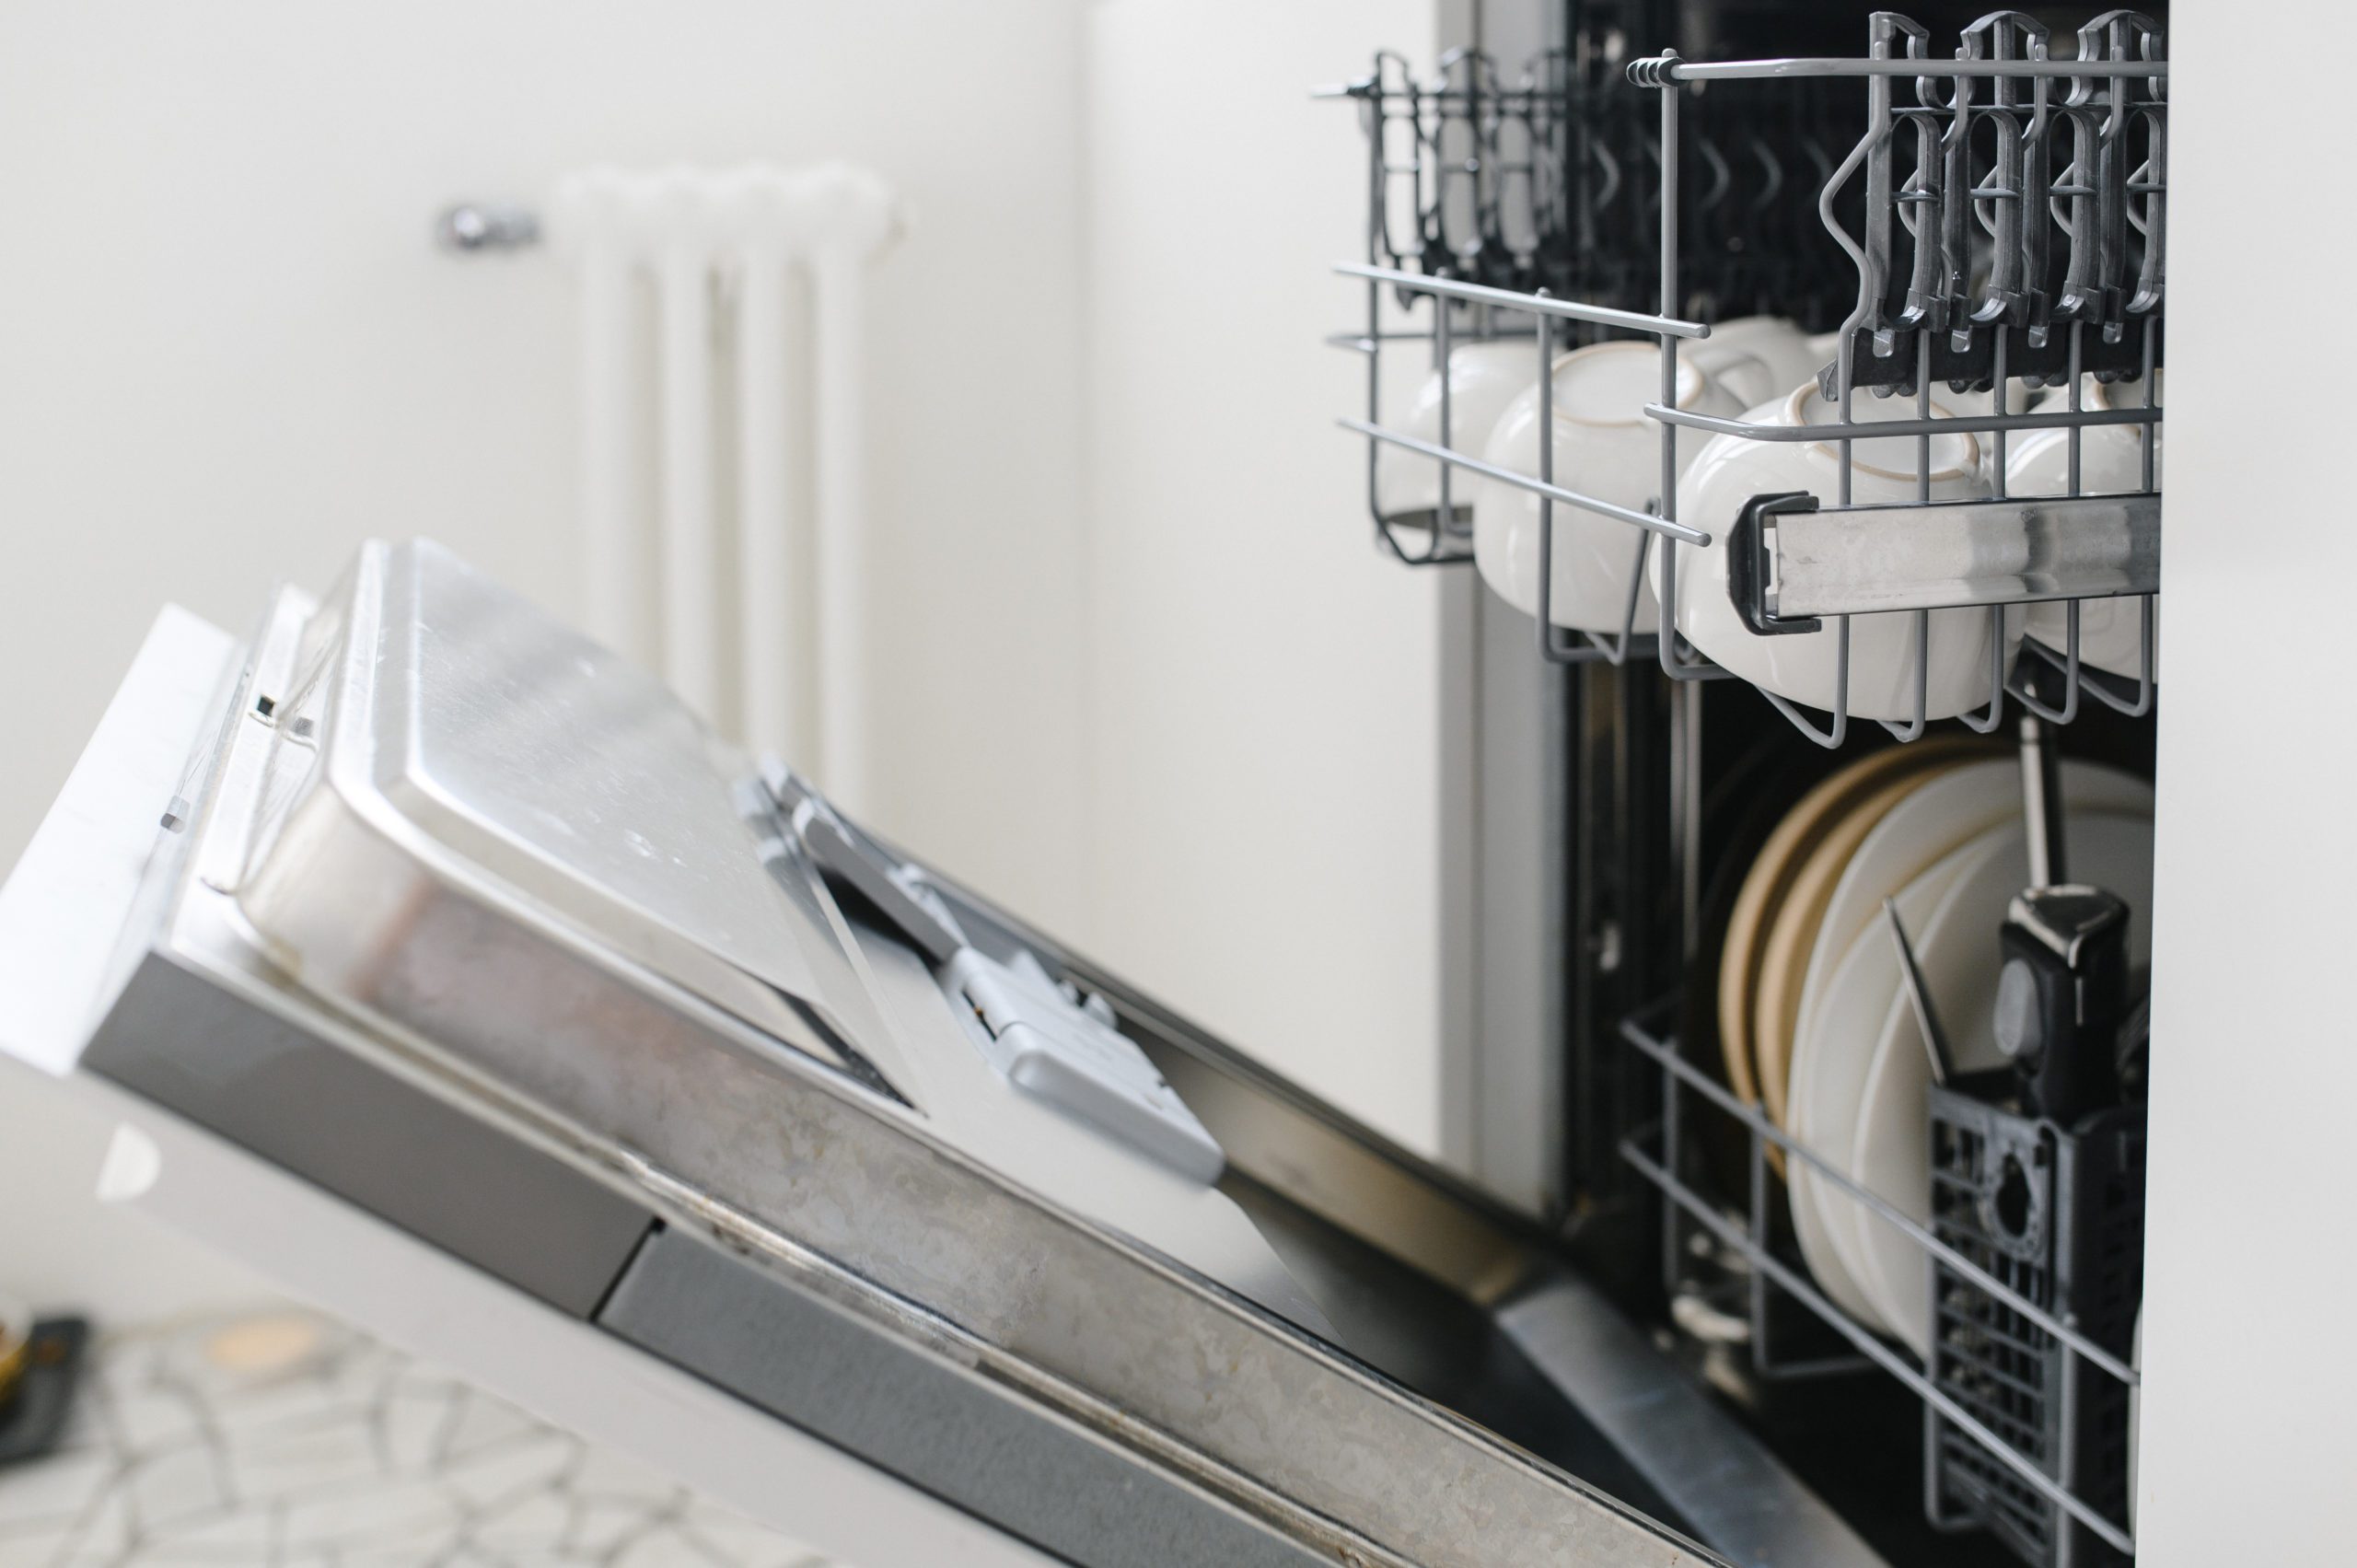 Faulty dishwasher install : r/HomeMaintenance